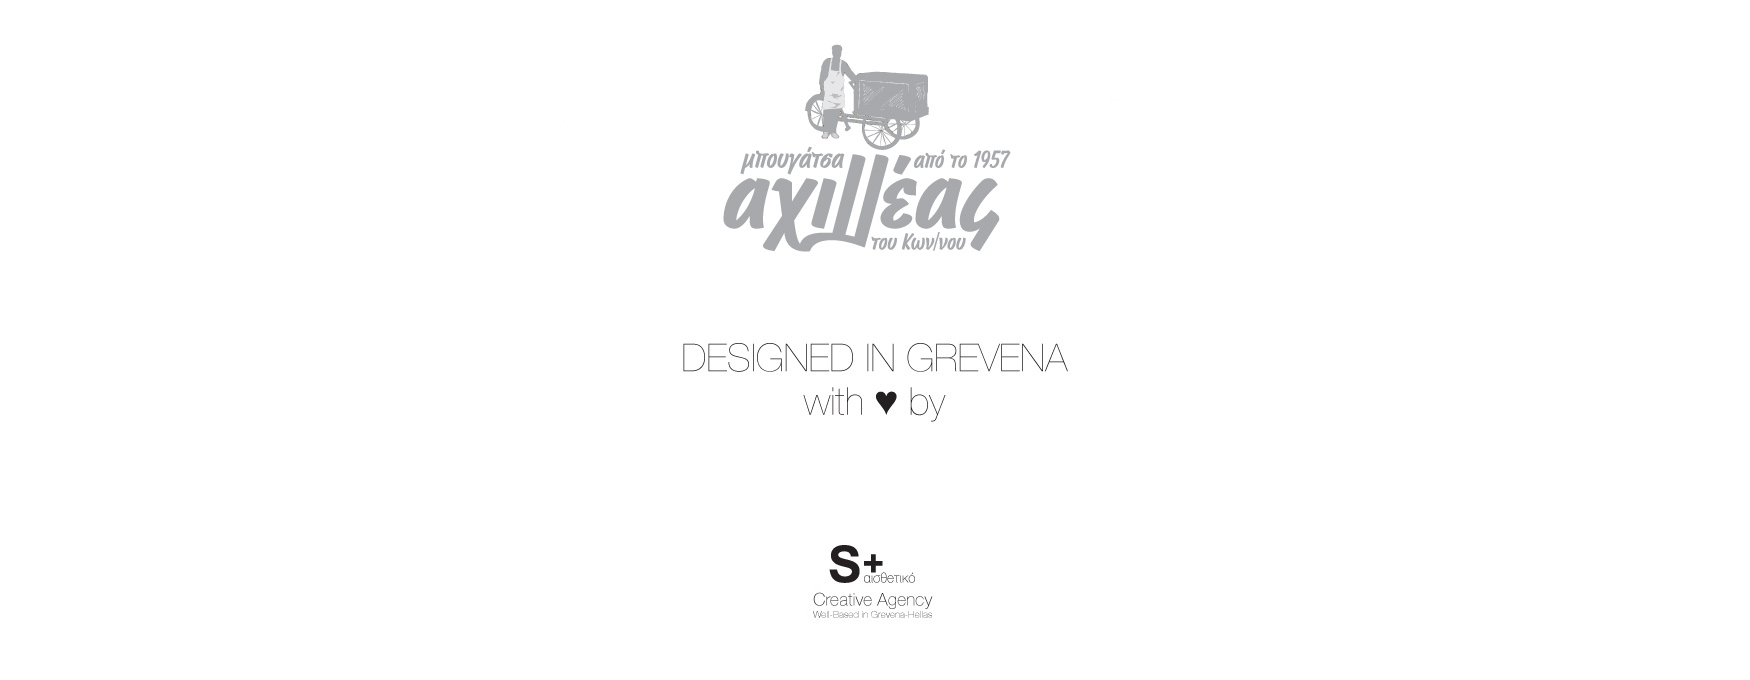 axilleas_logo_designed